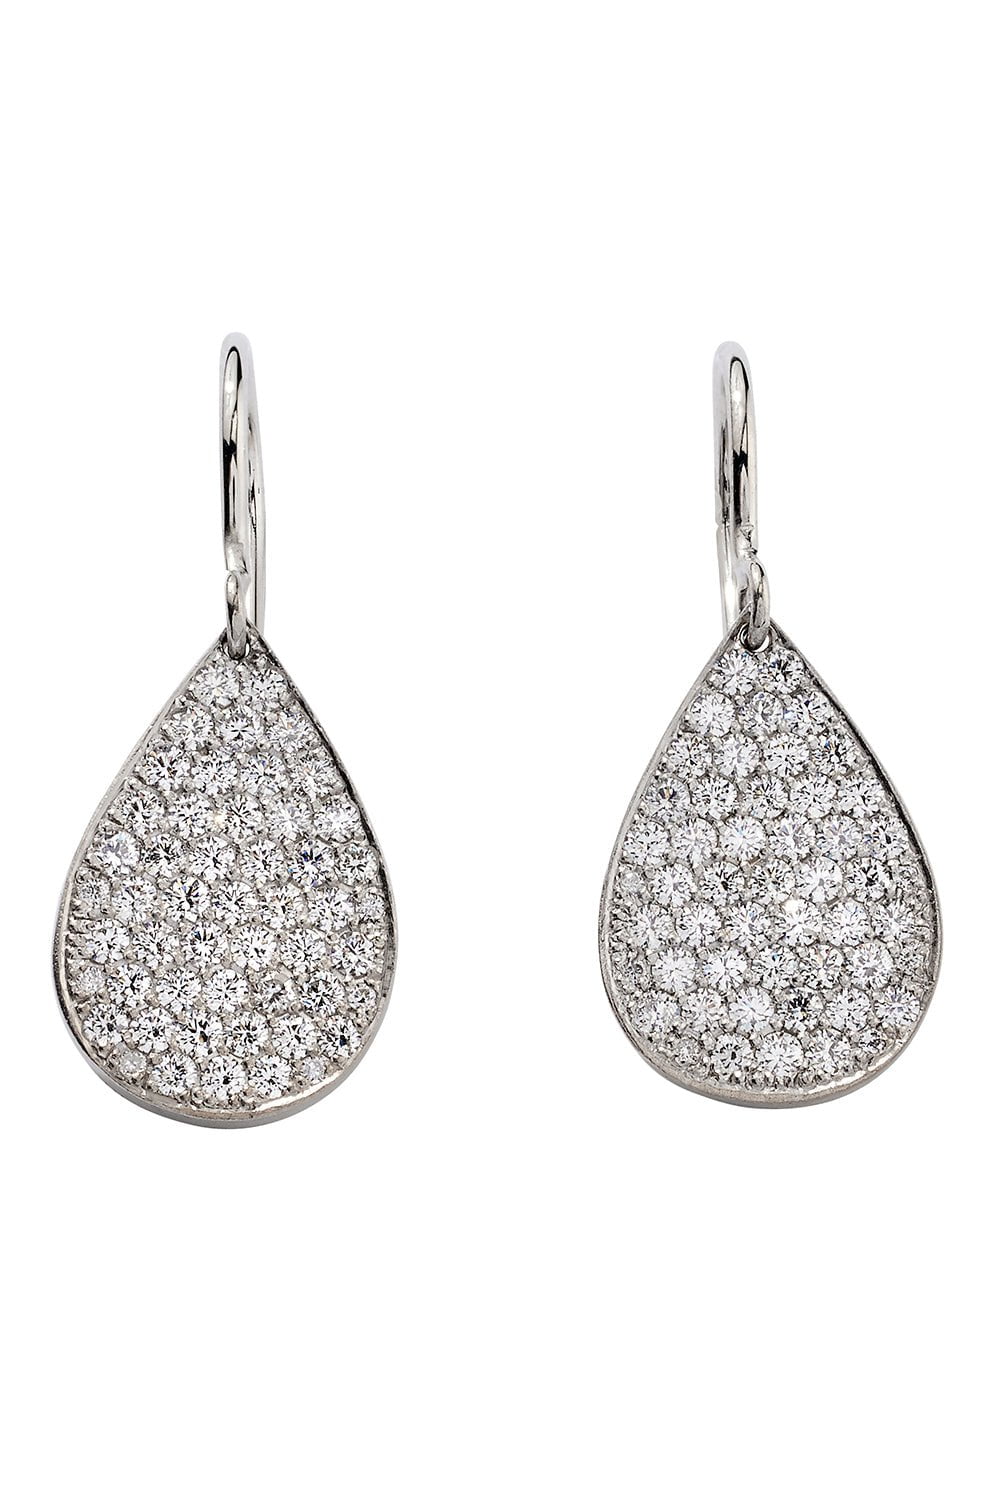 IRENE NEUWIRTH JEWELRY-Small Diamond Pear Earrings-WHITE GOLD